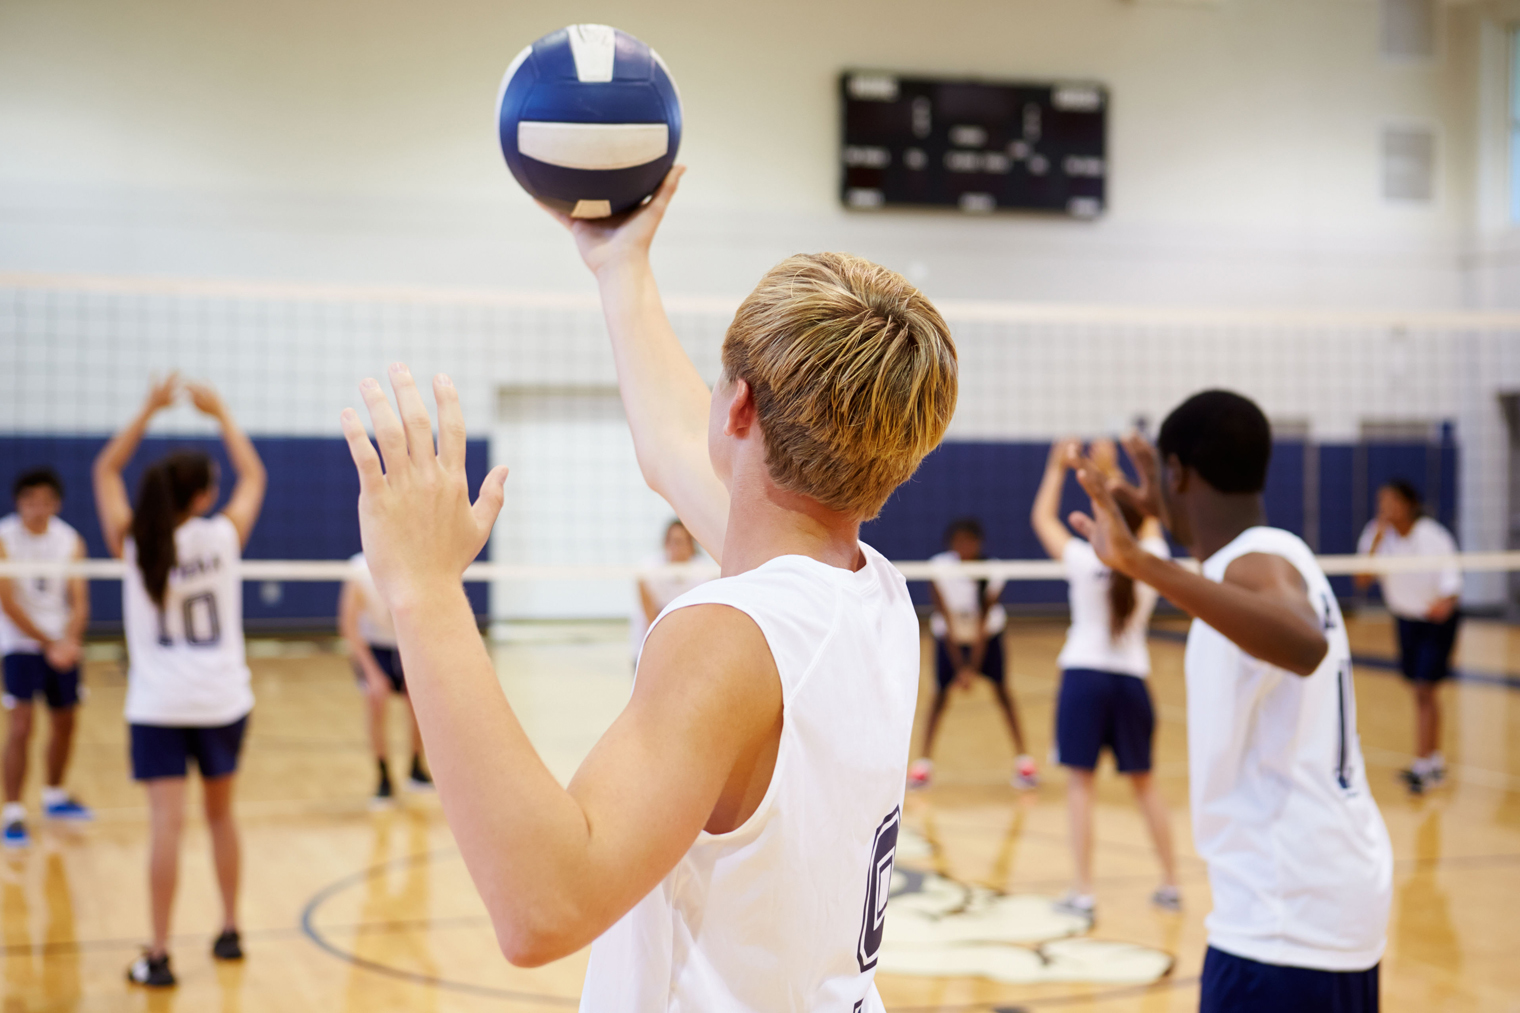 Physiothérapie et volleyball